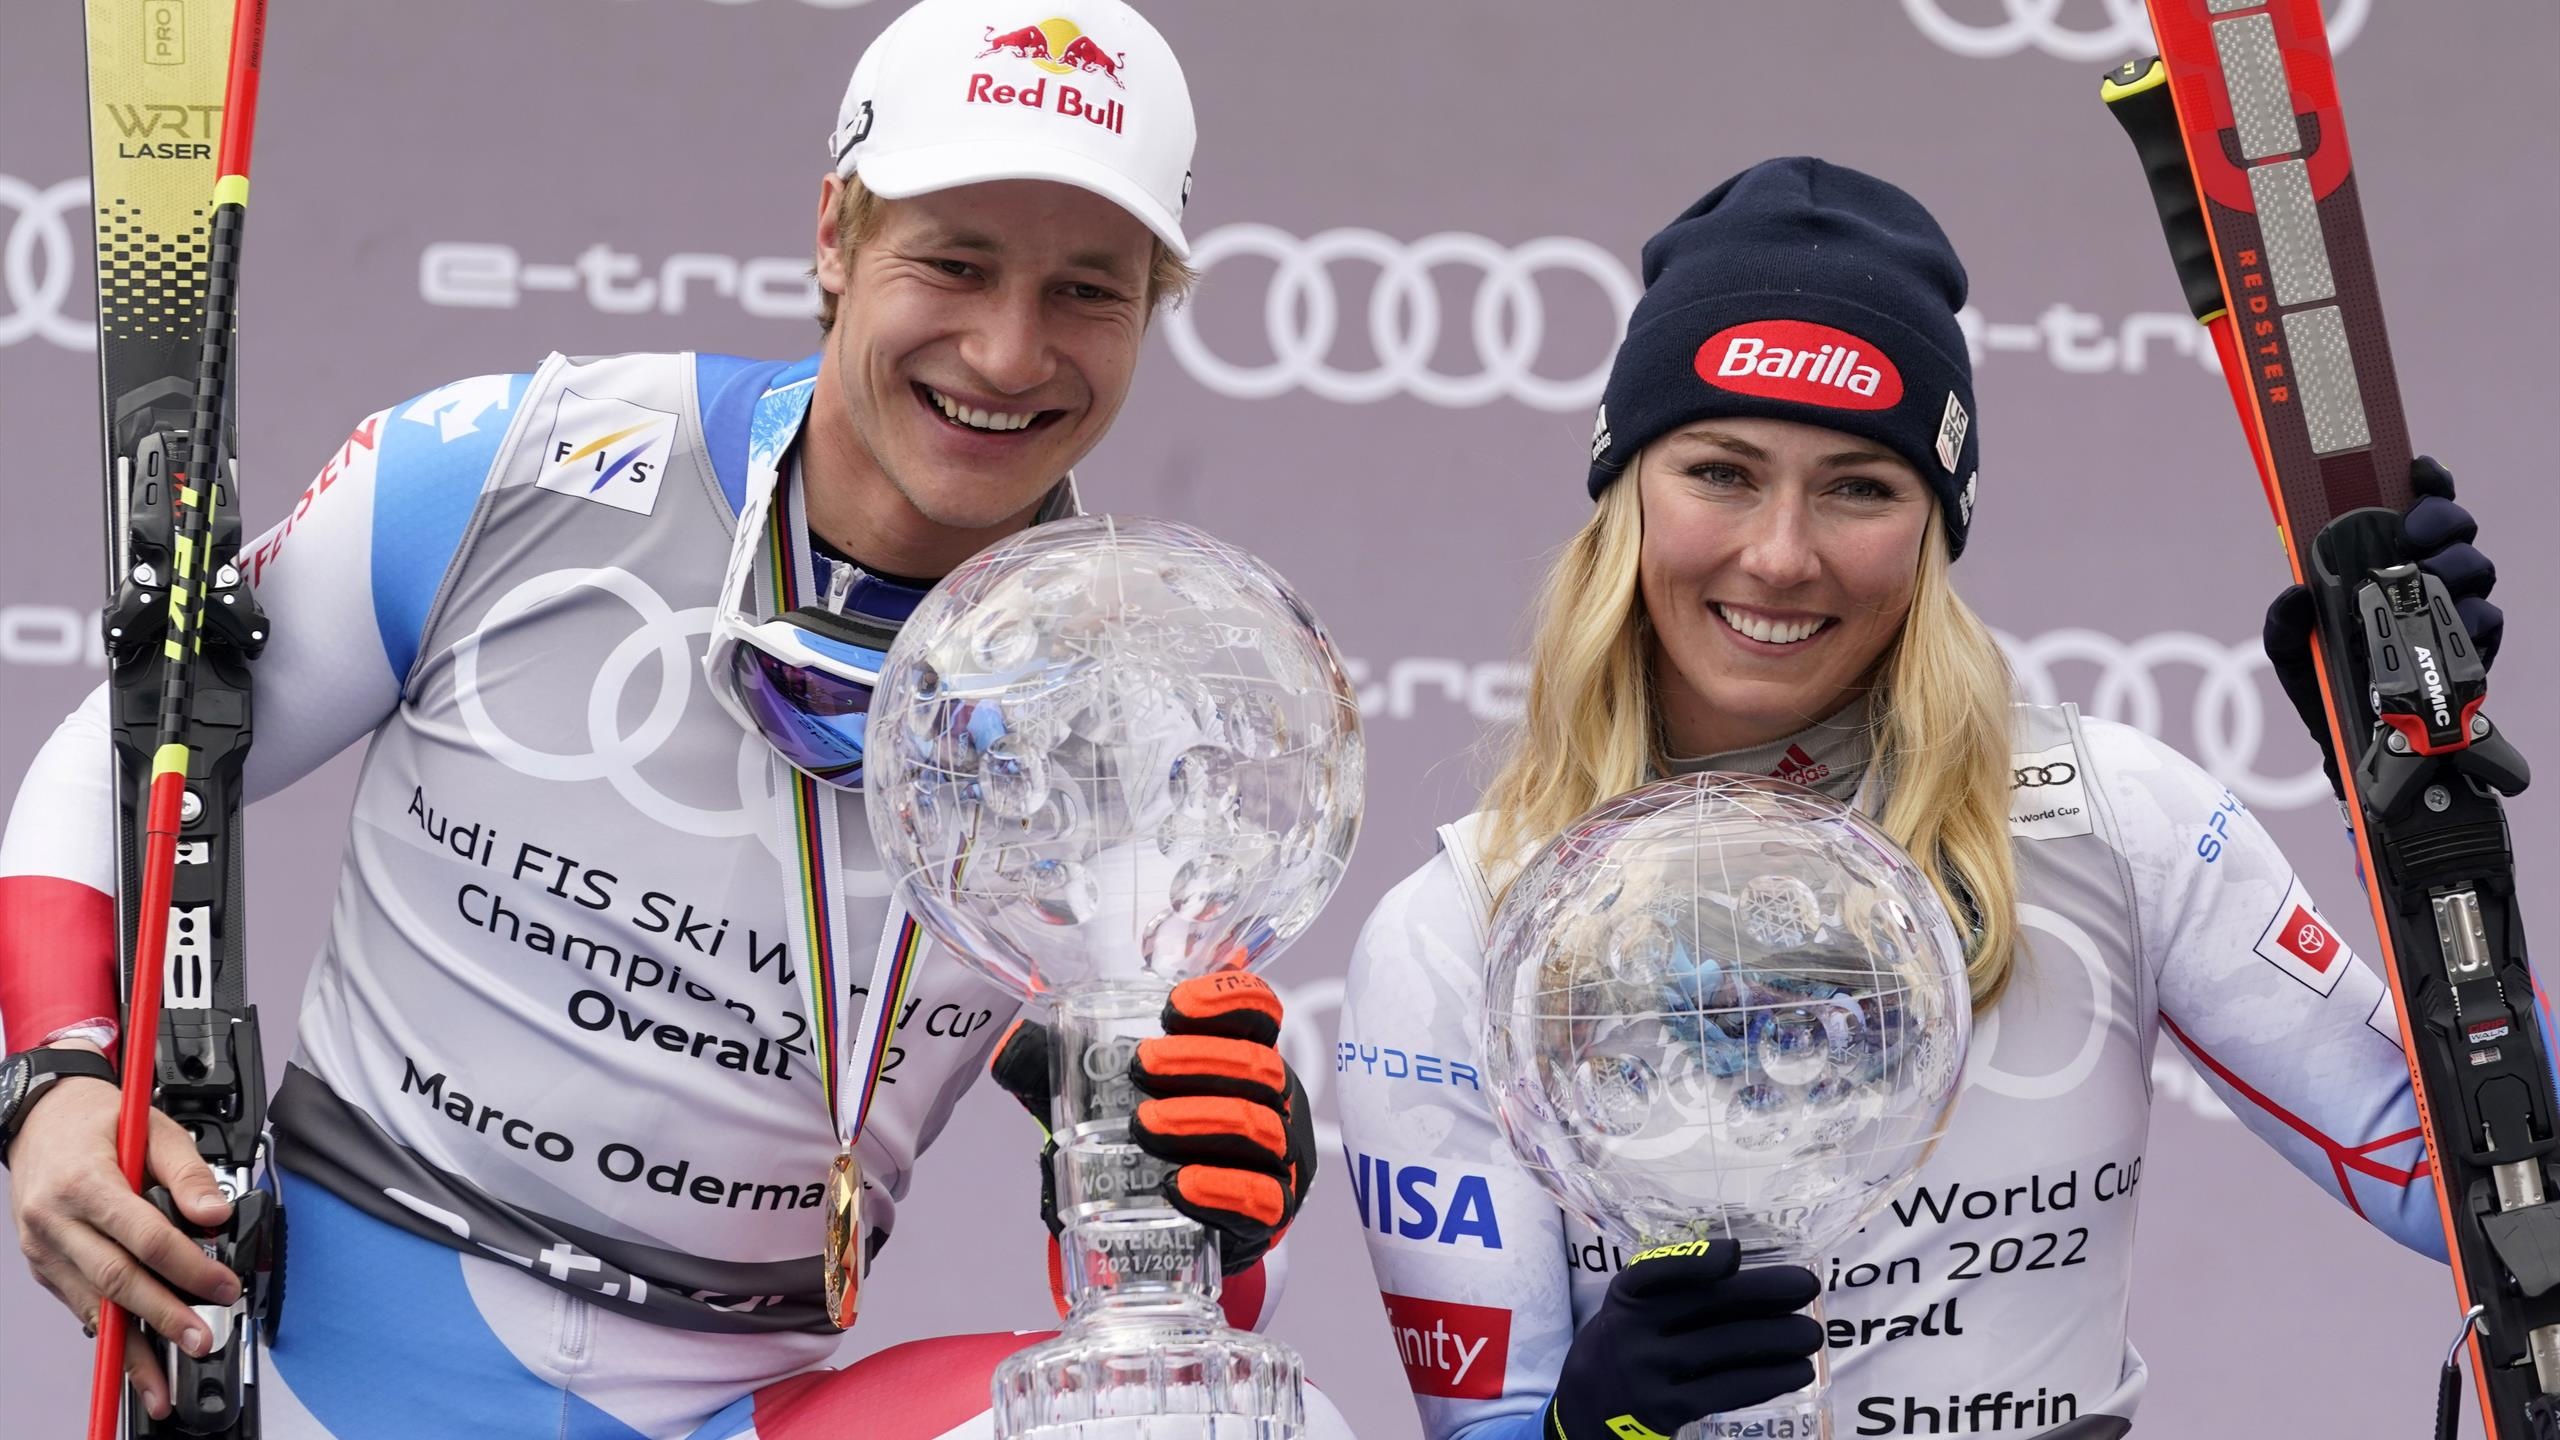 Marco Odermatt, Alpine skiing, Victory celebration, Swiss athlete, 2560x1440 HD Desktop